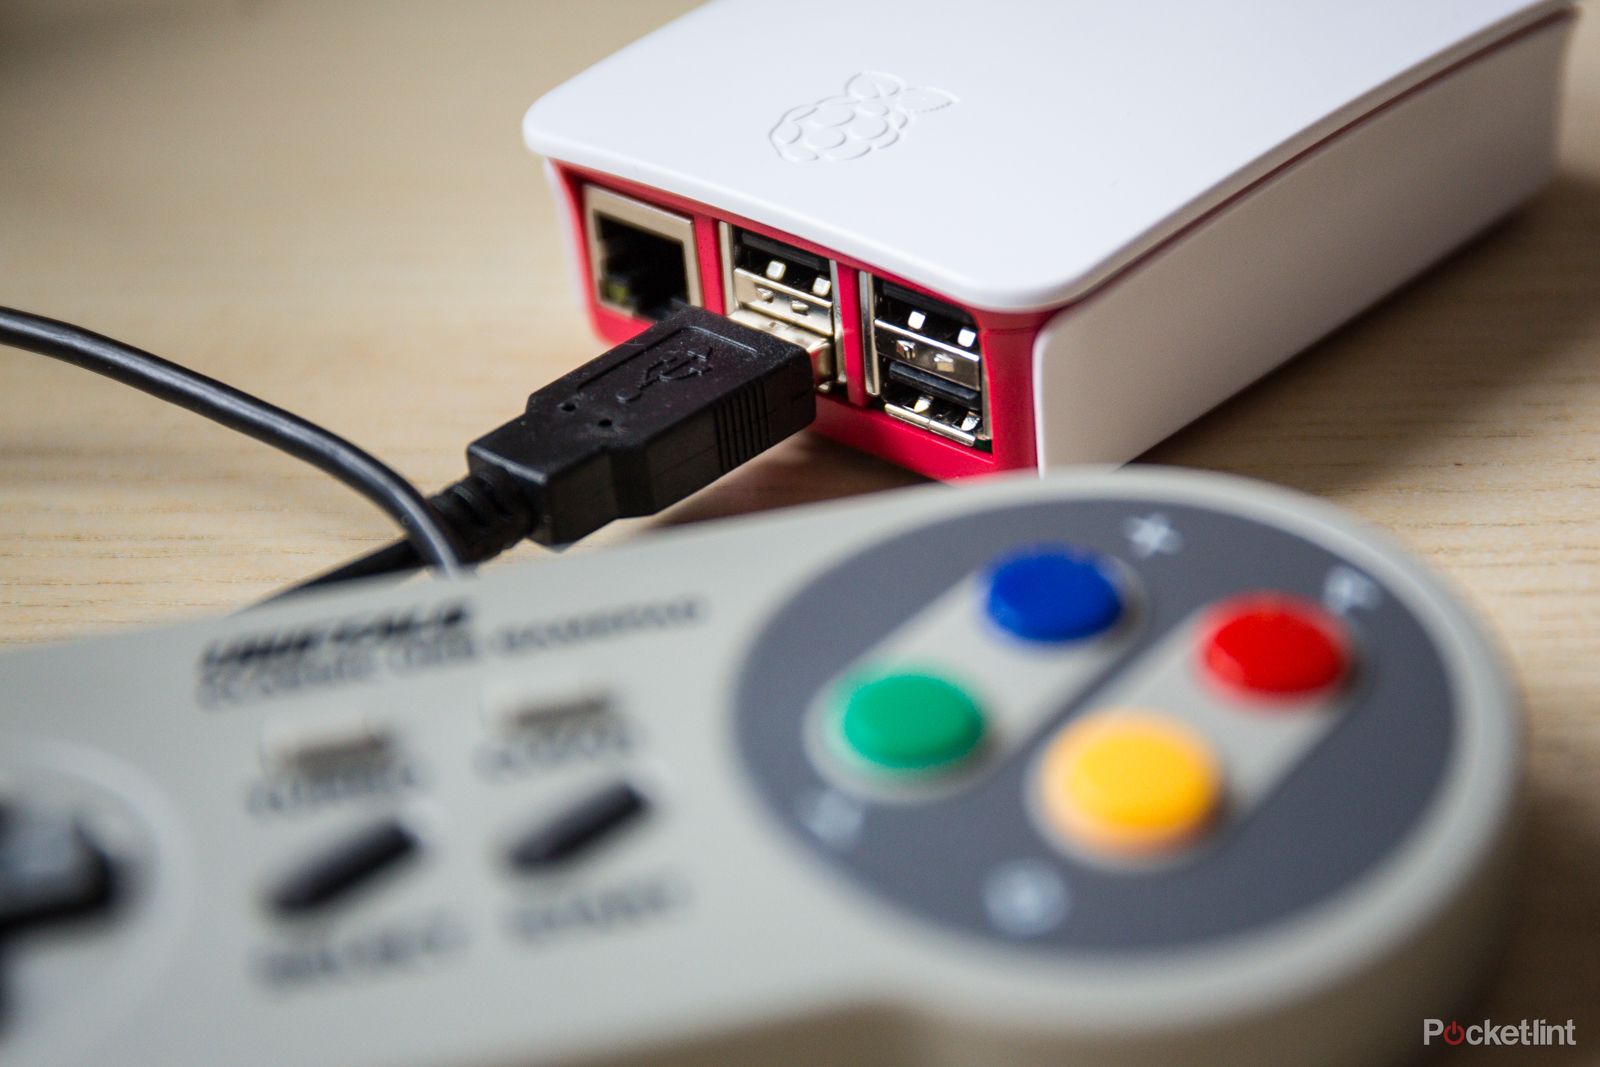 How To Add Roms To RetroPie - Raspberry Pi Video Game Card Rom